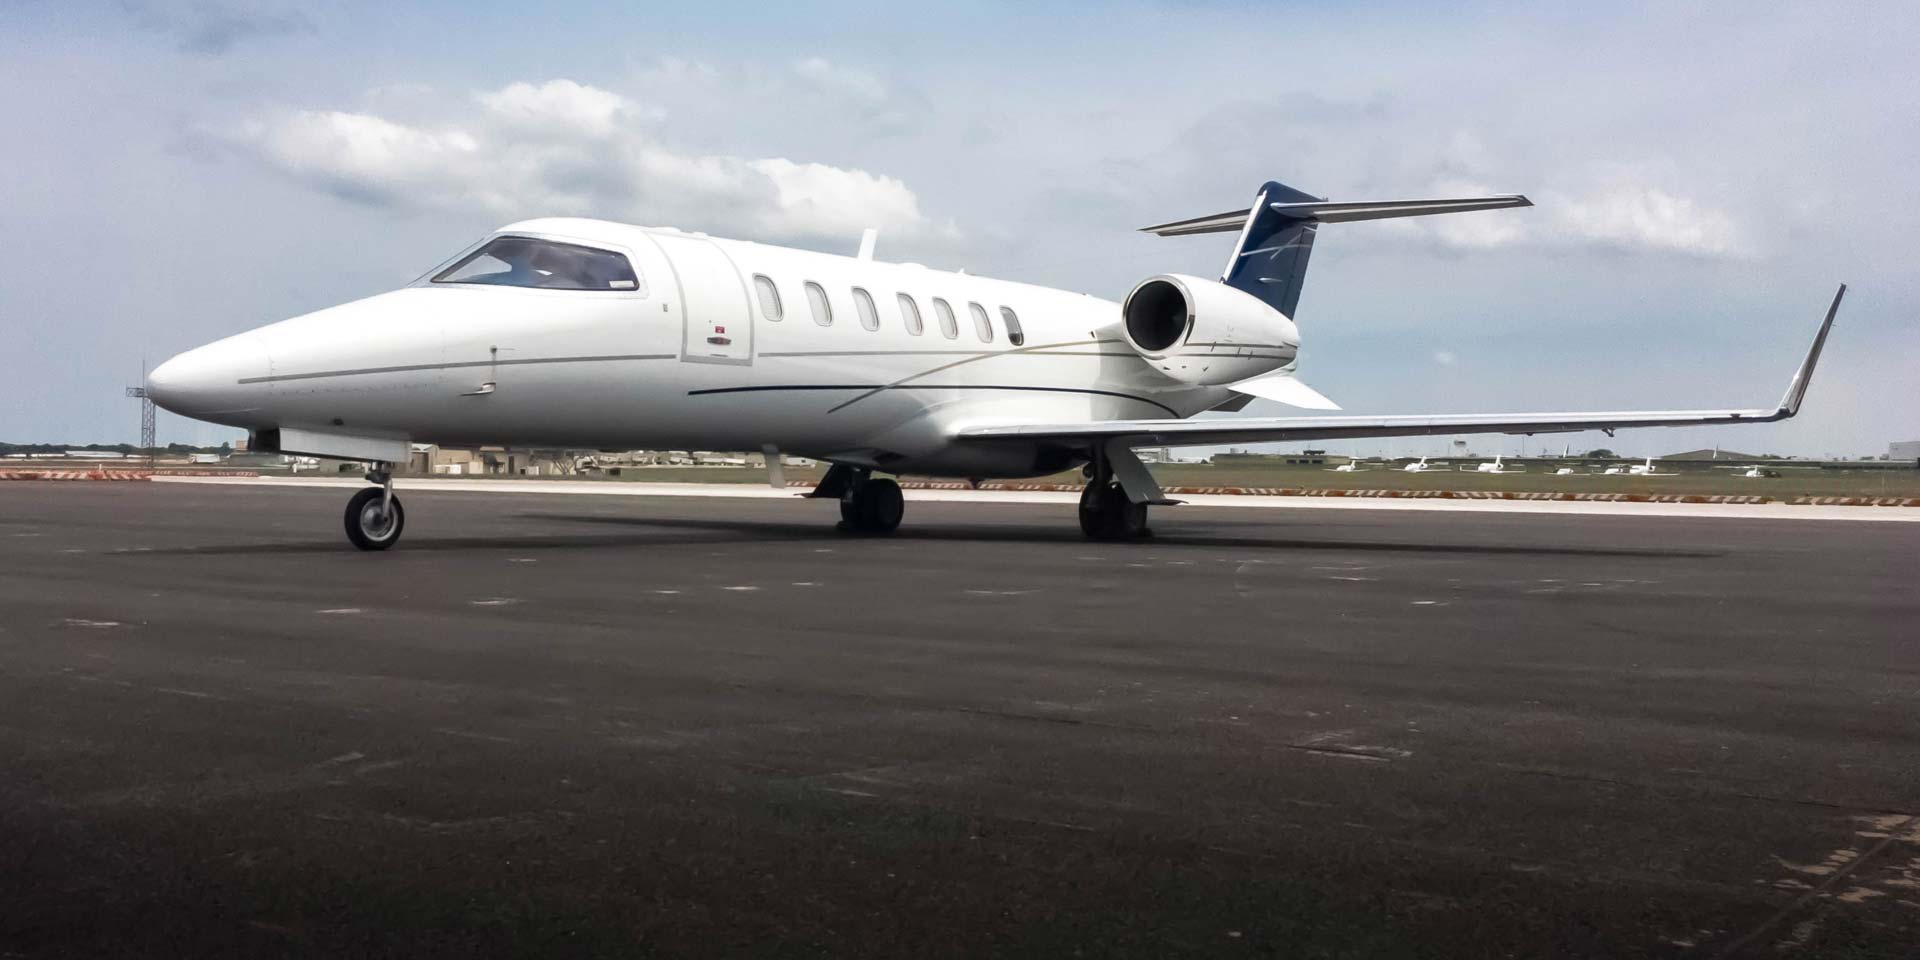 Orlando Private Jet Charter Rental Company Breaks Sales Record